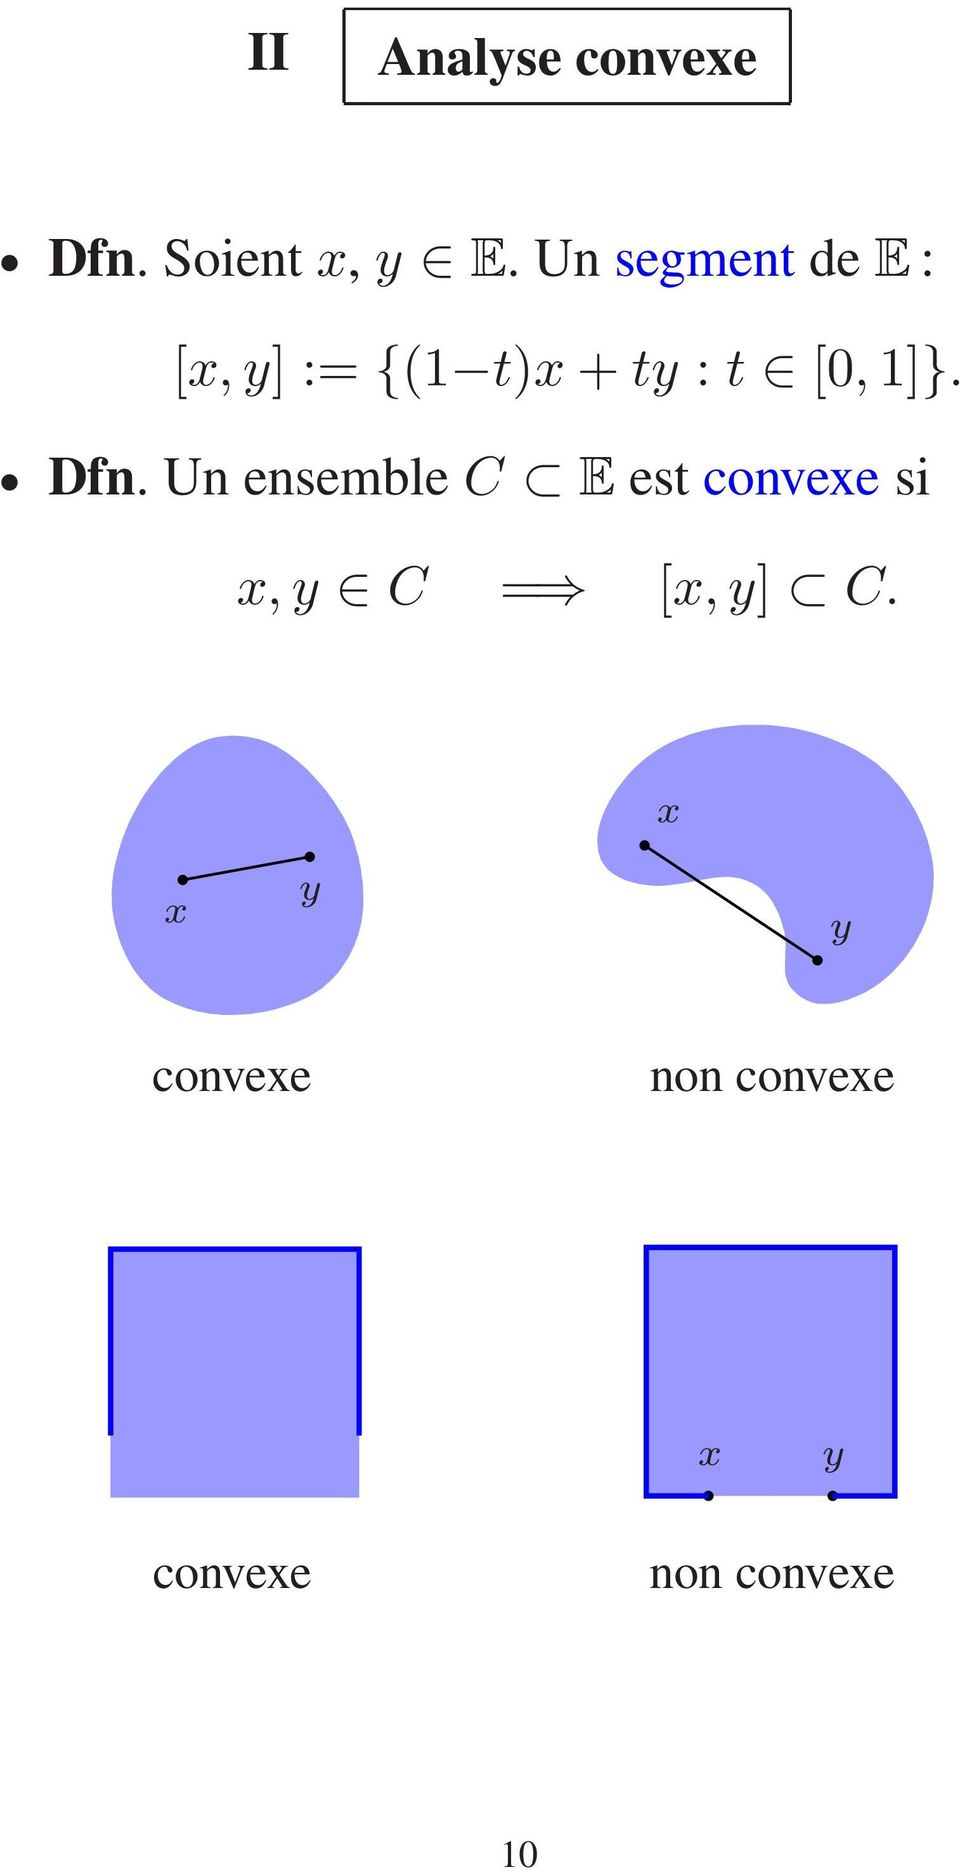 Dfn. Un ensemble C E est convexe si x,y C =